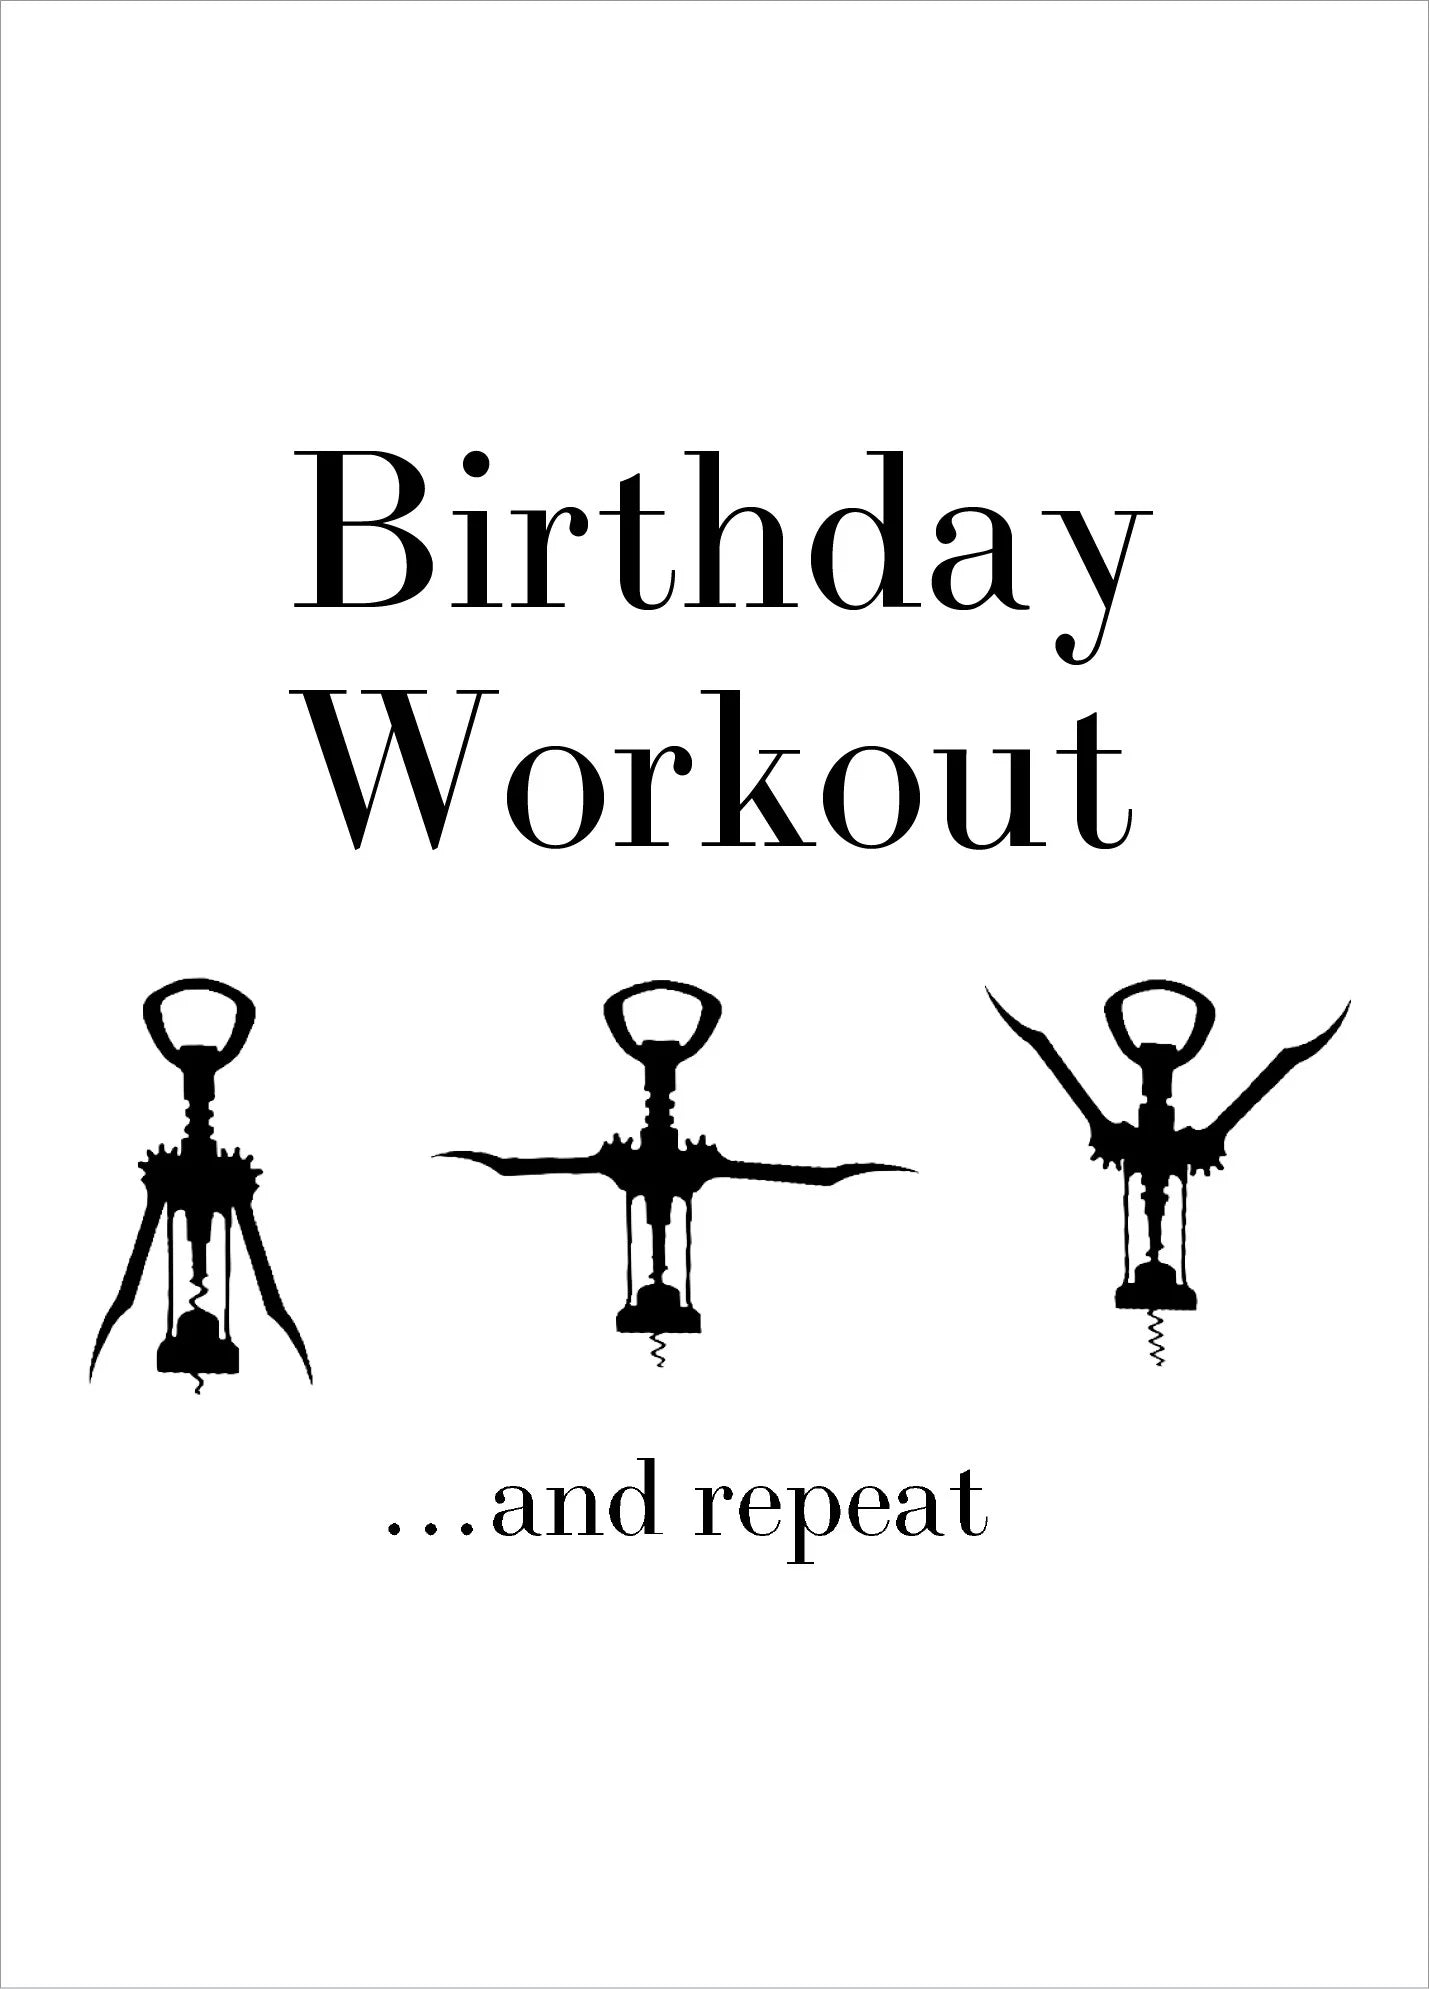 Birthday Workout Greeting Card